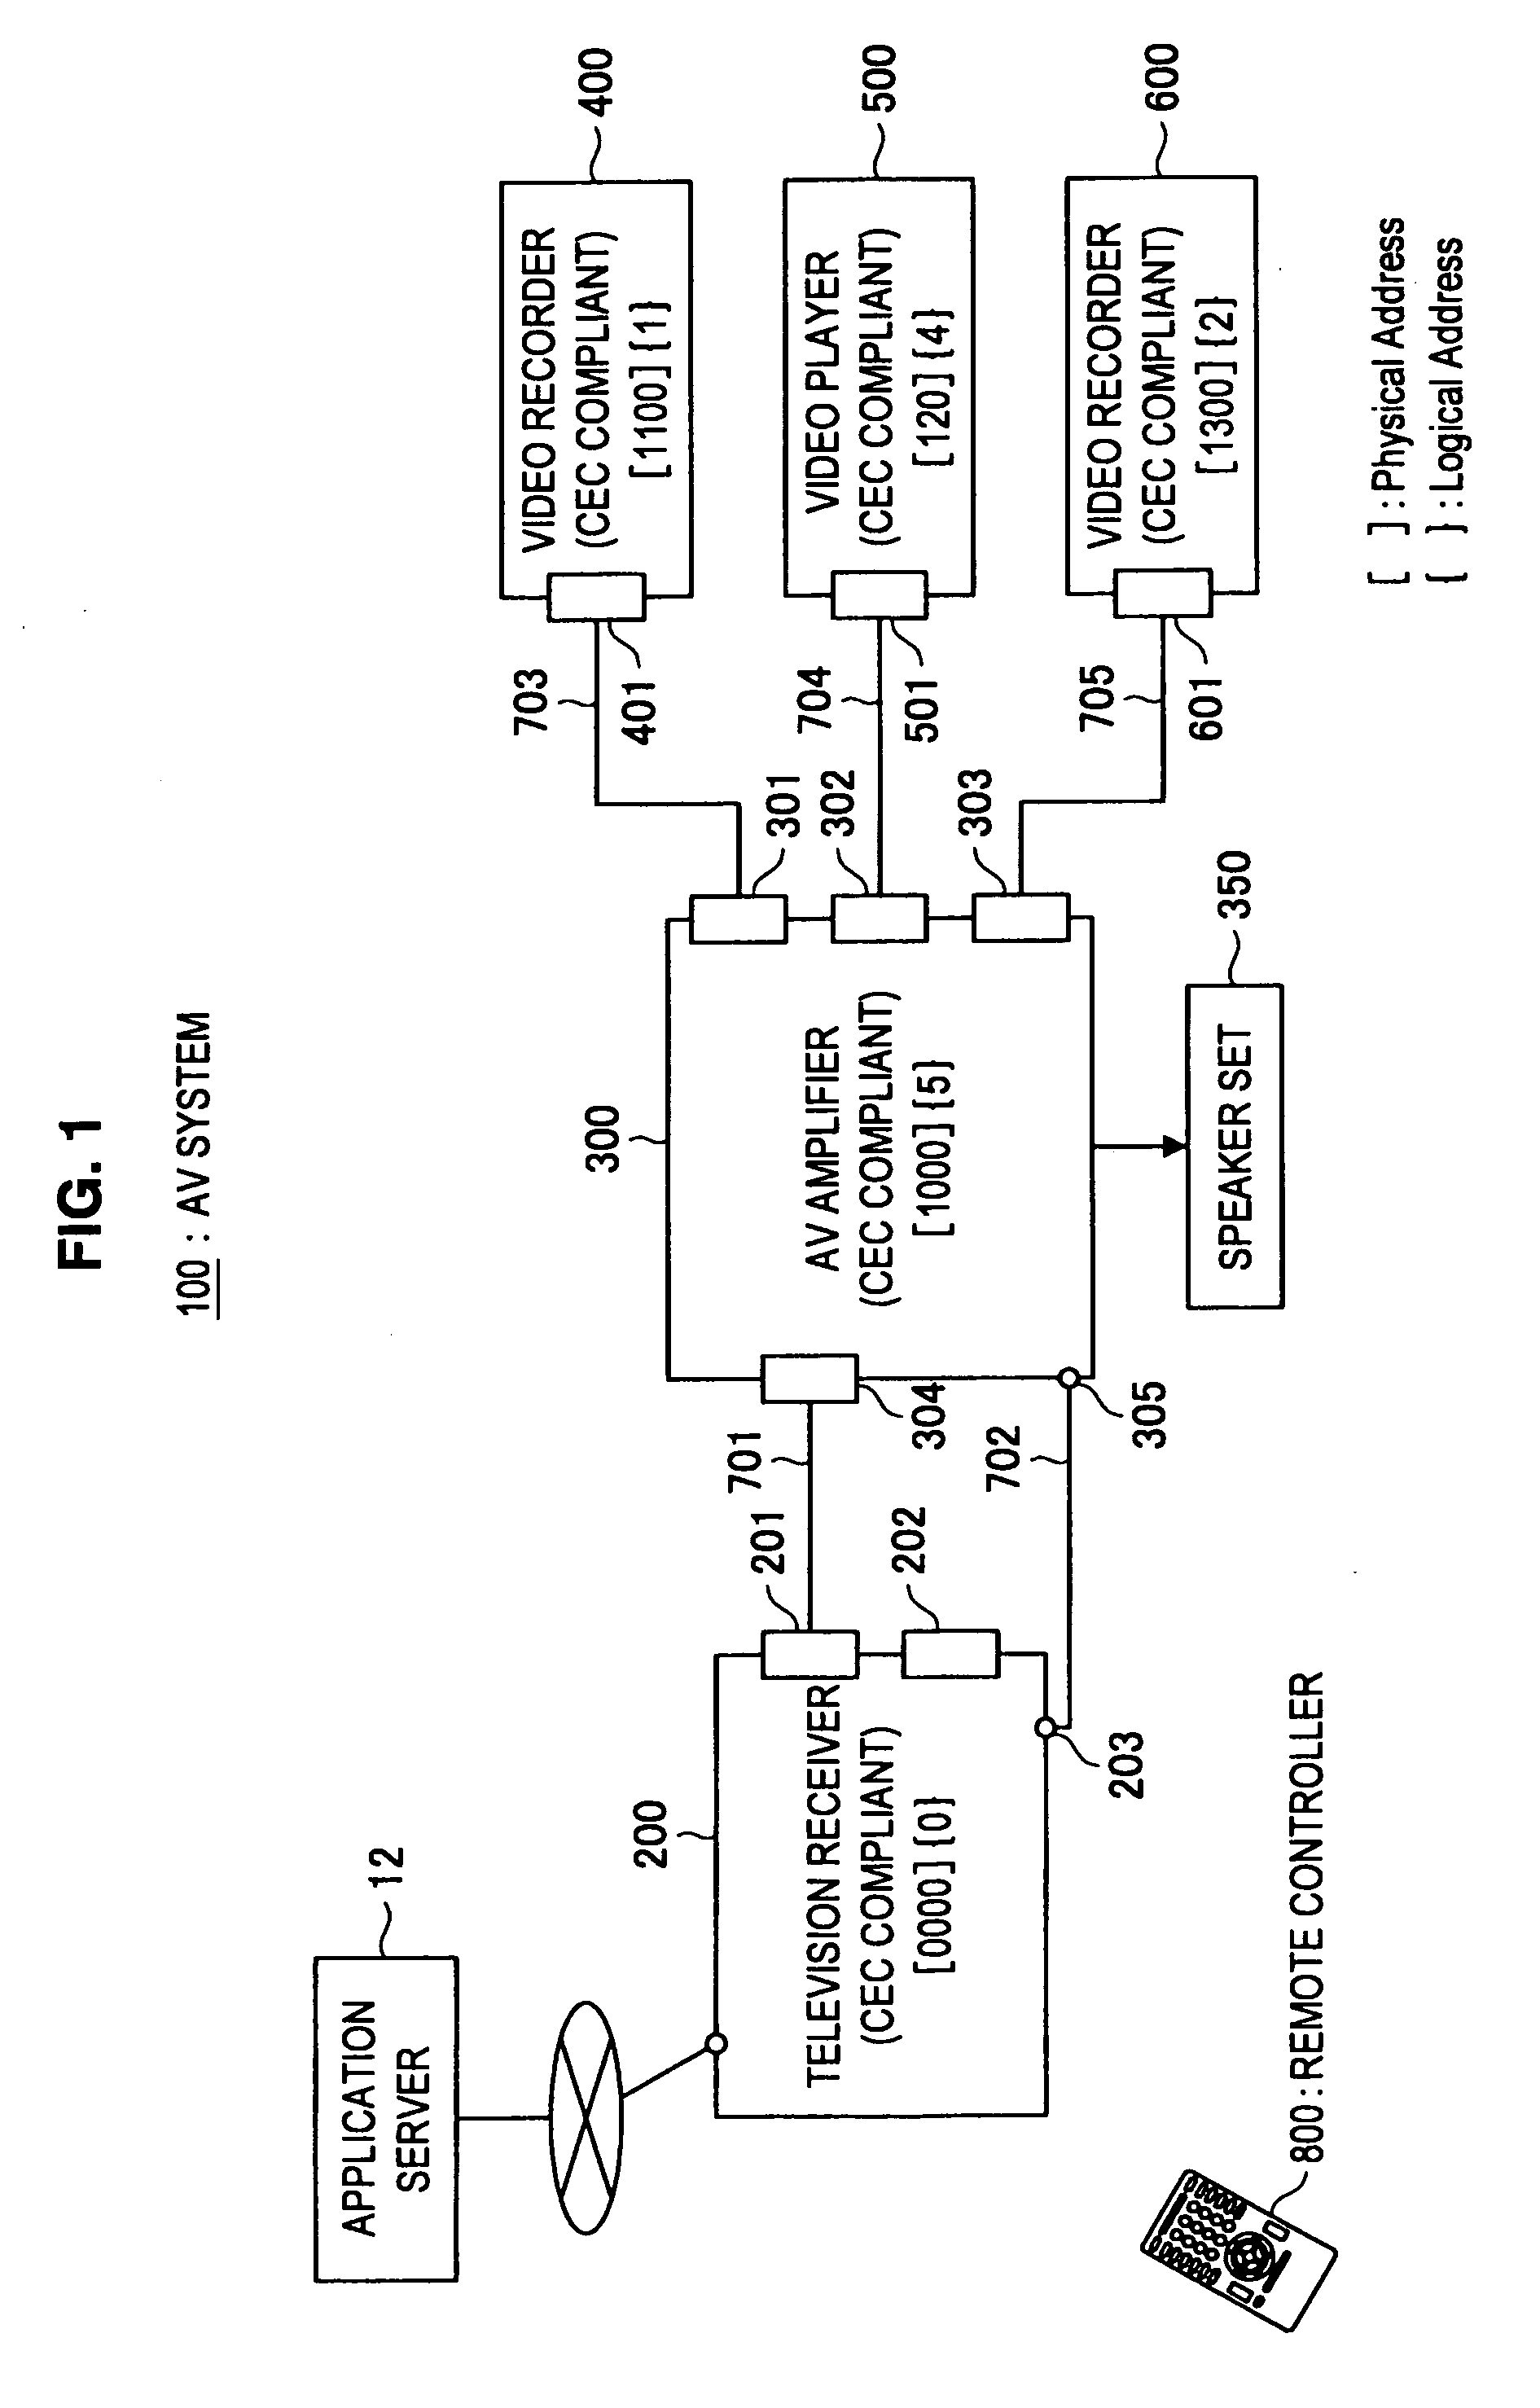 Device control apparatus, device control method and computer program